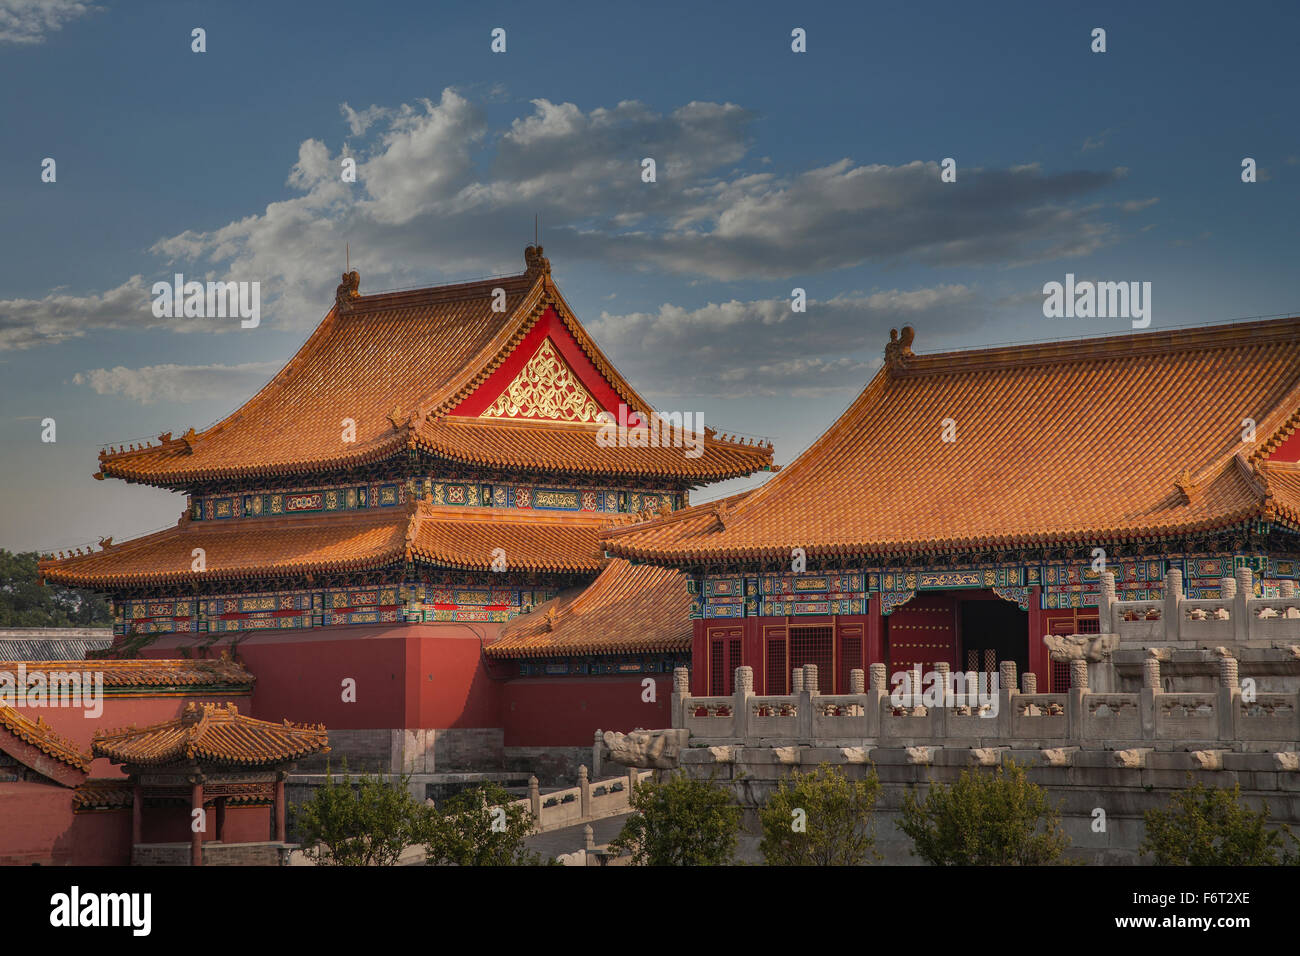 Forbidden City temple buildings, Beijing, China Stock Photo